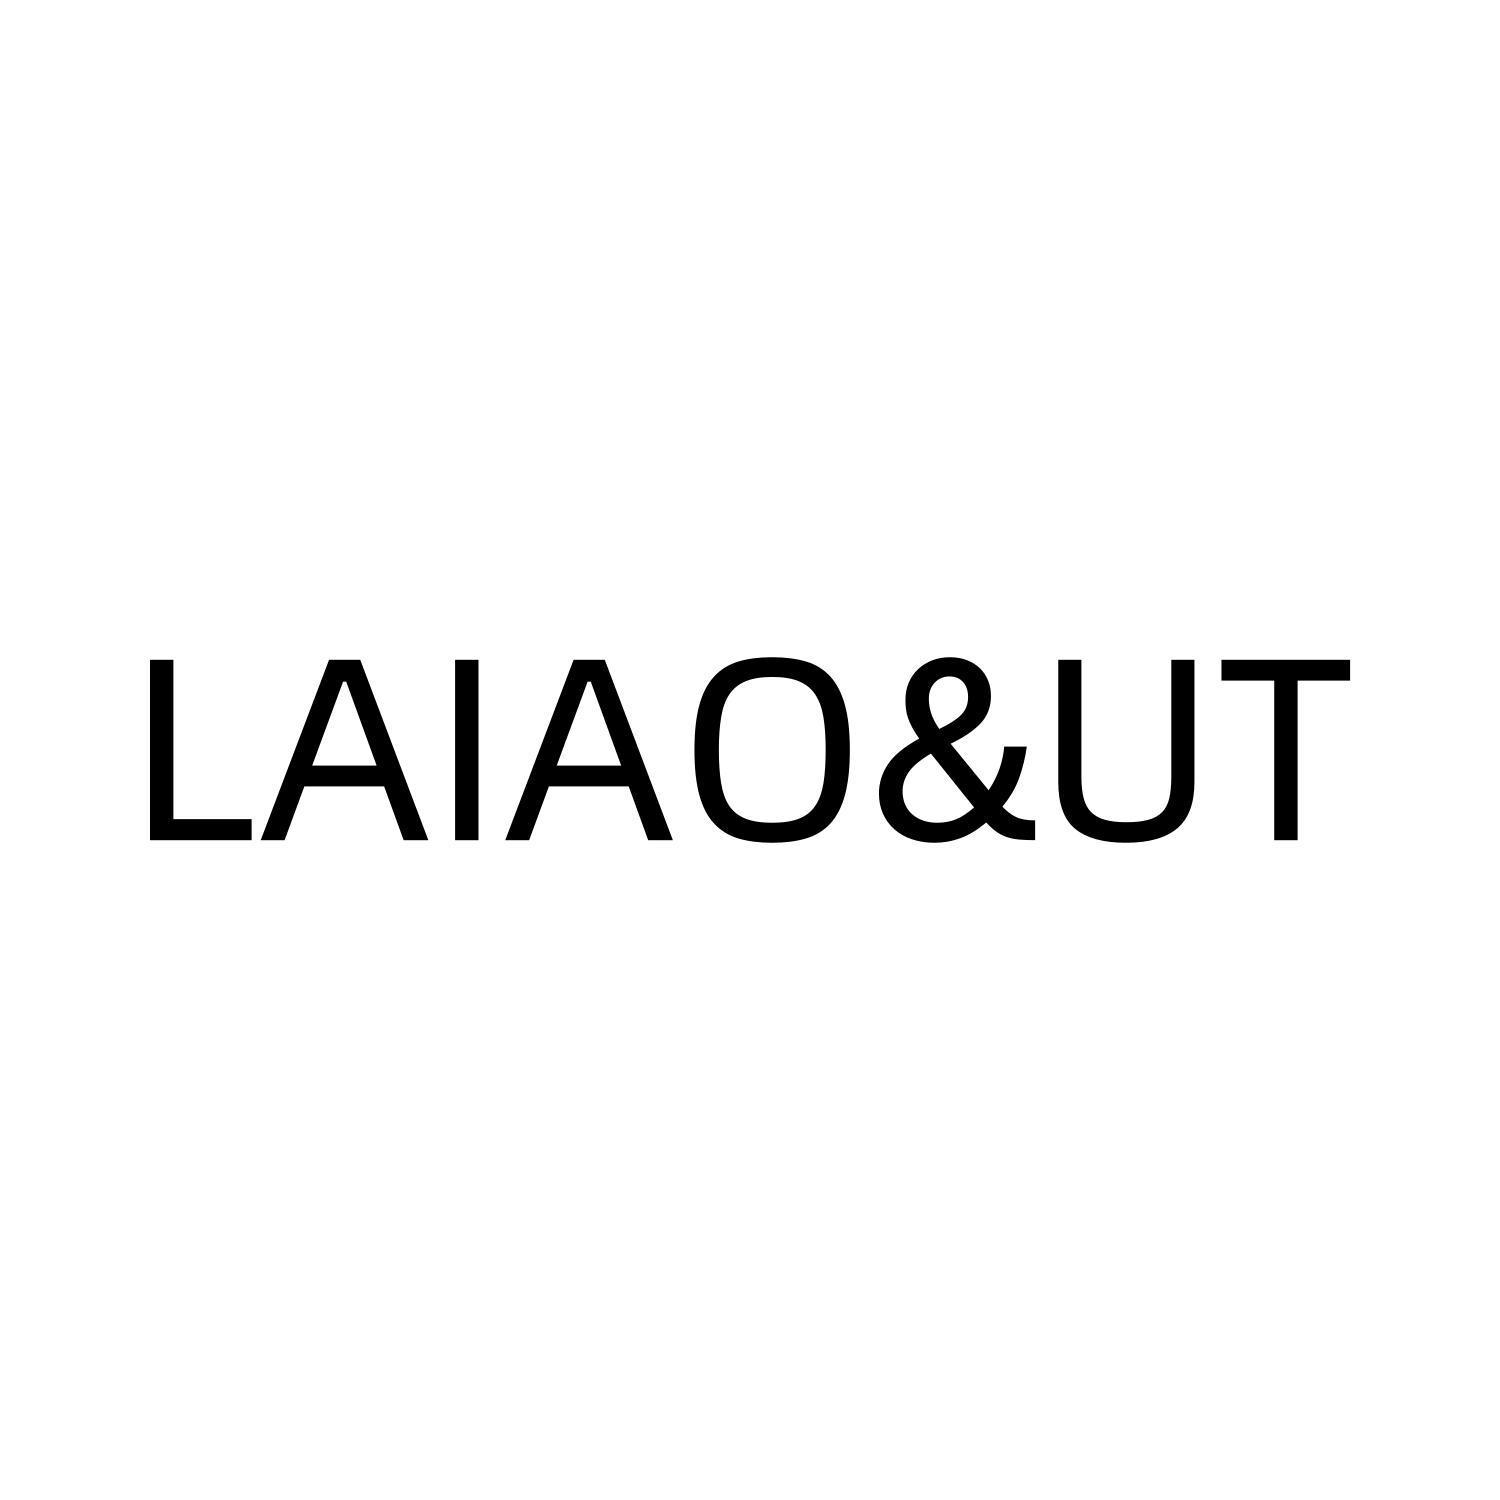 LAIAO&UTlogo